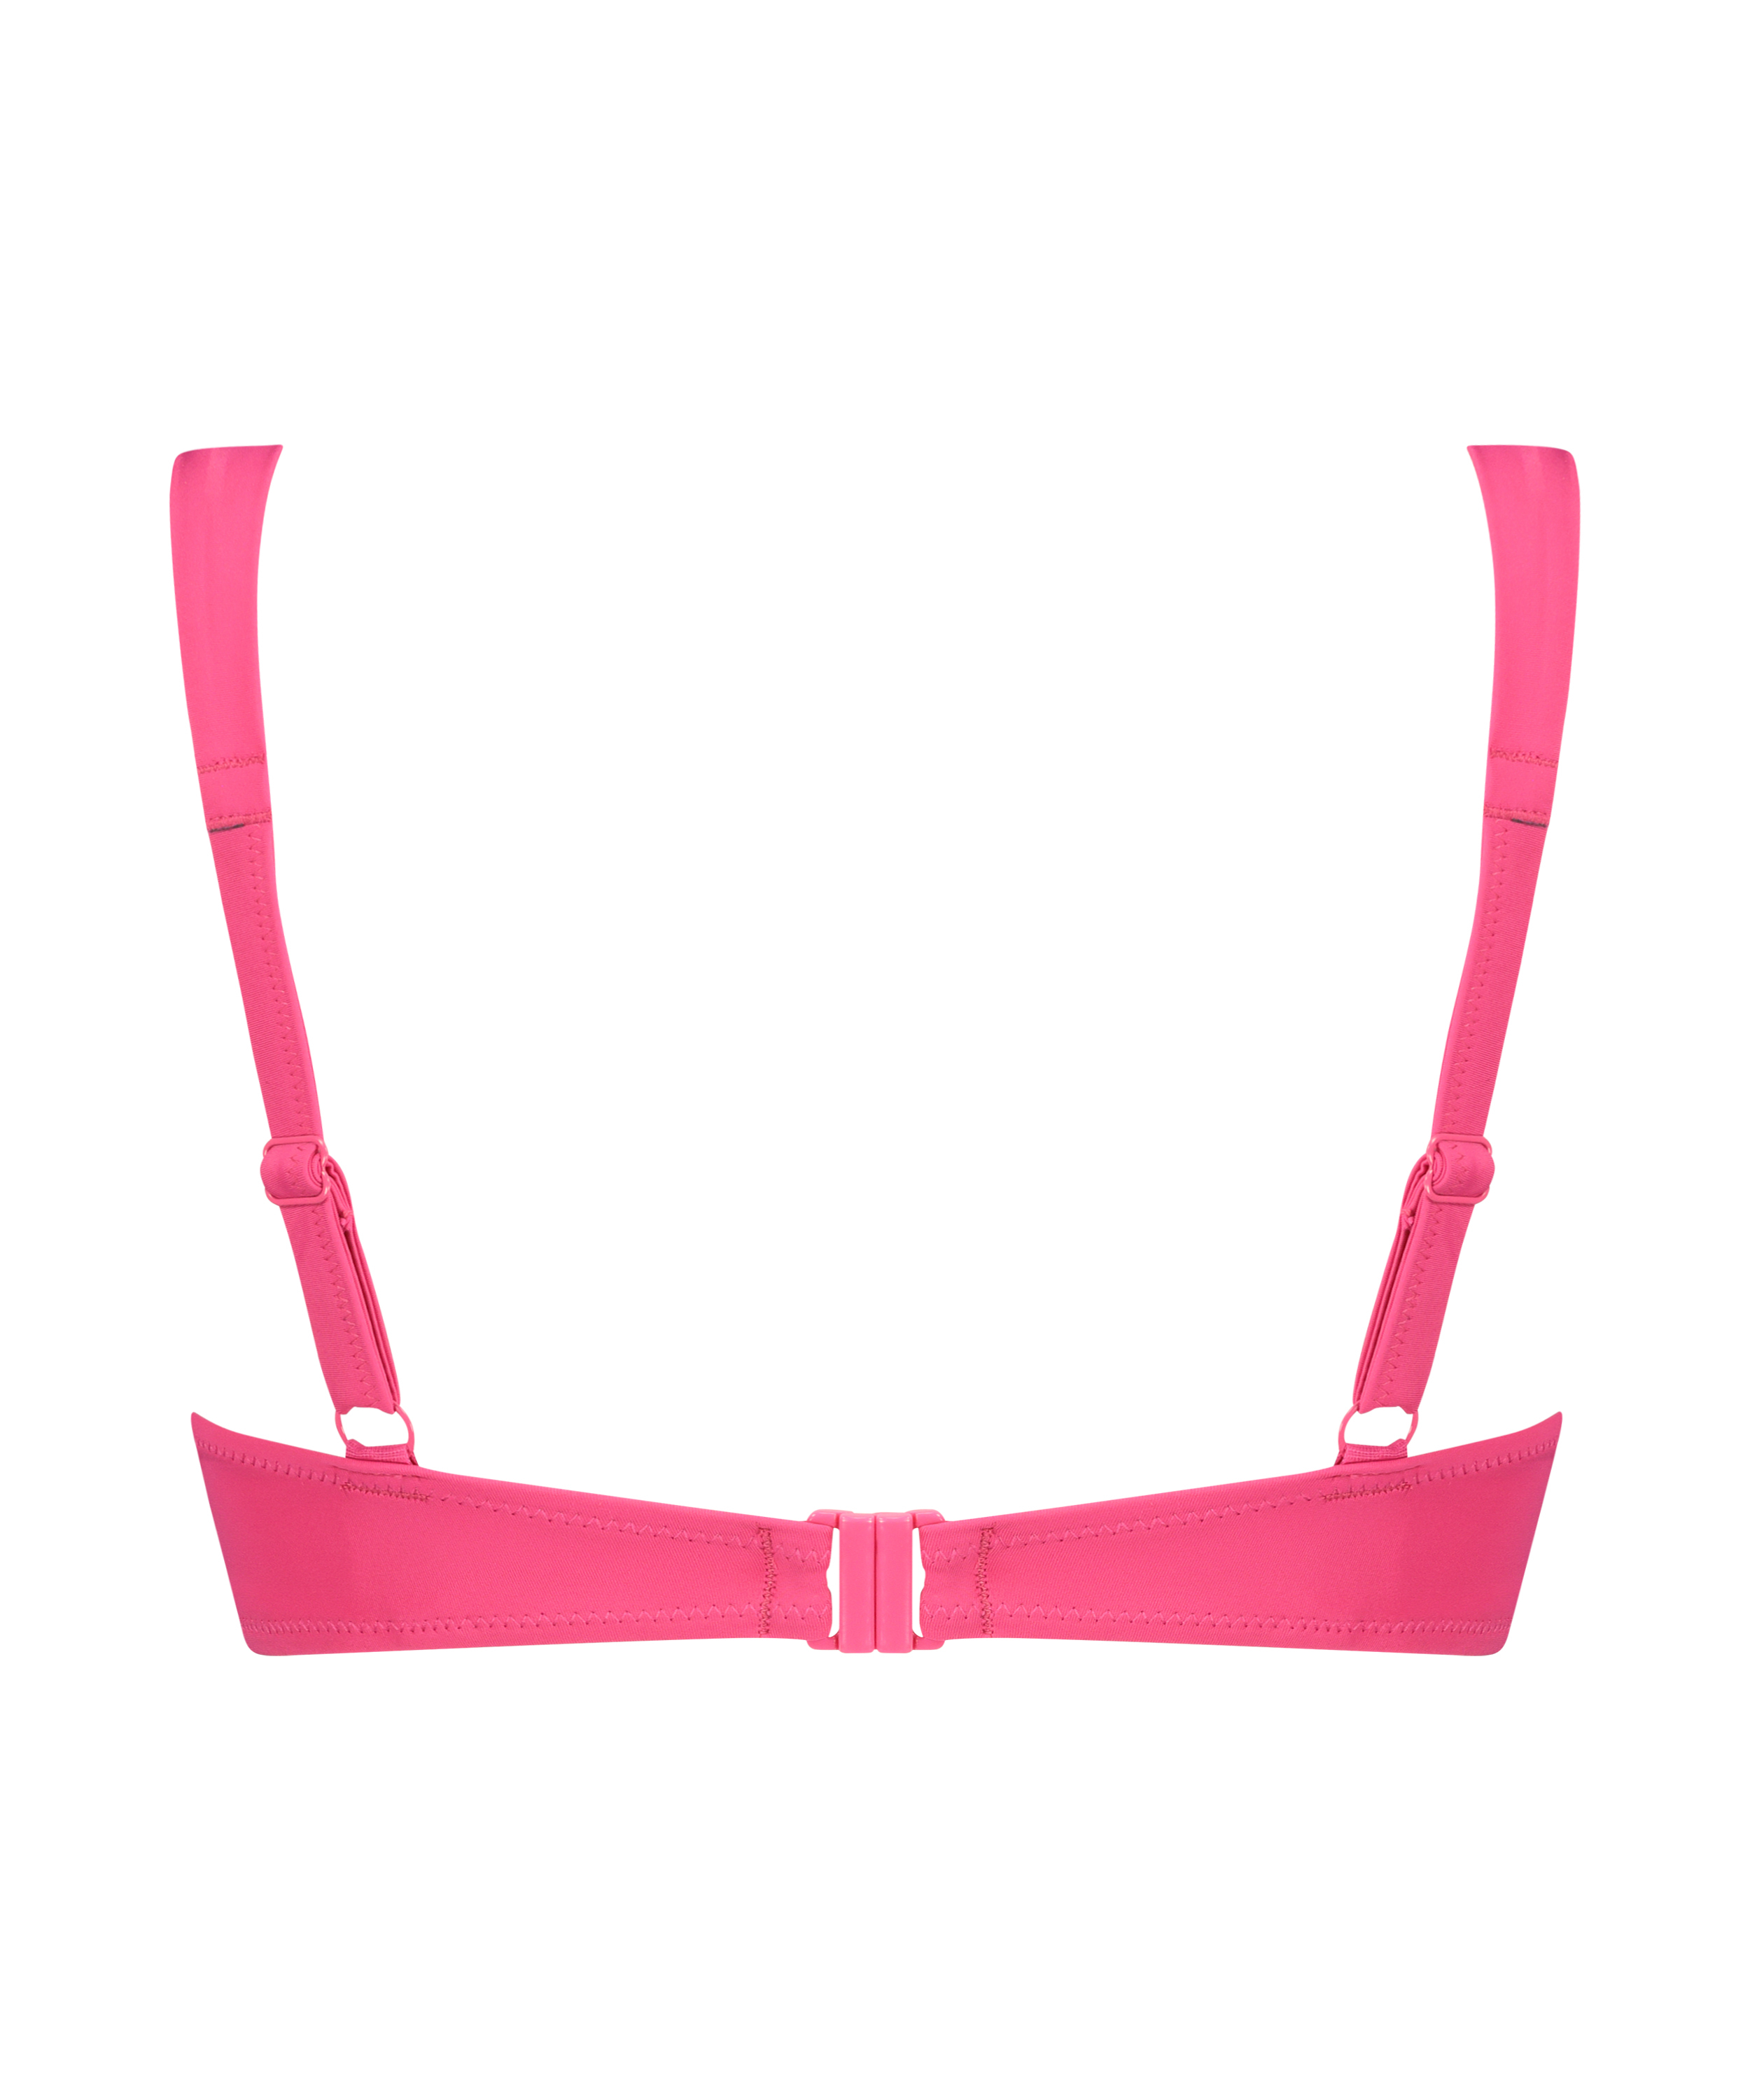 Padded underwired bikini top Luxe Cup E +, Pink, main